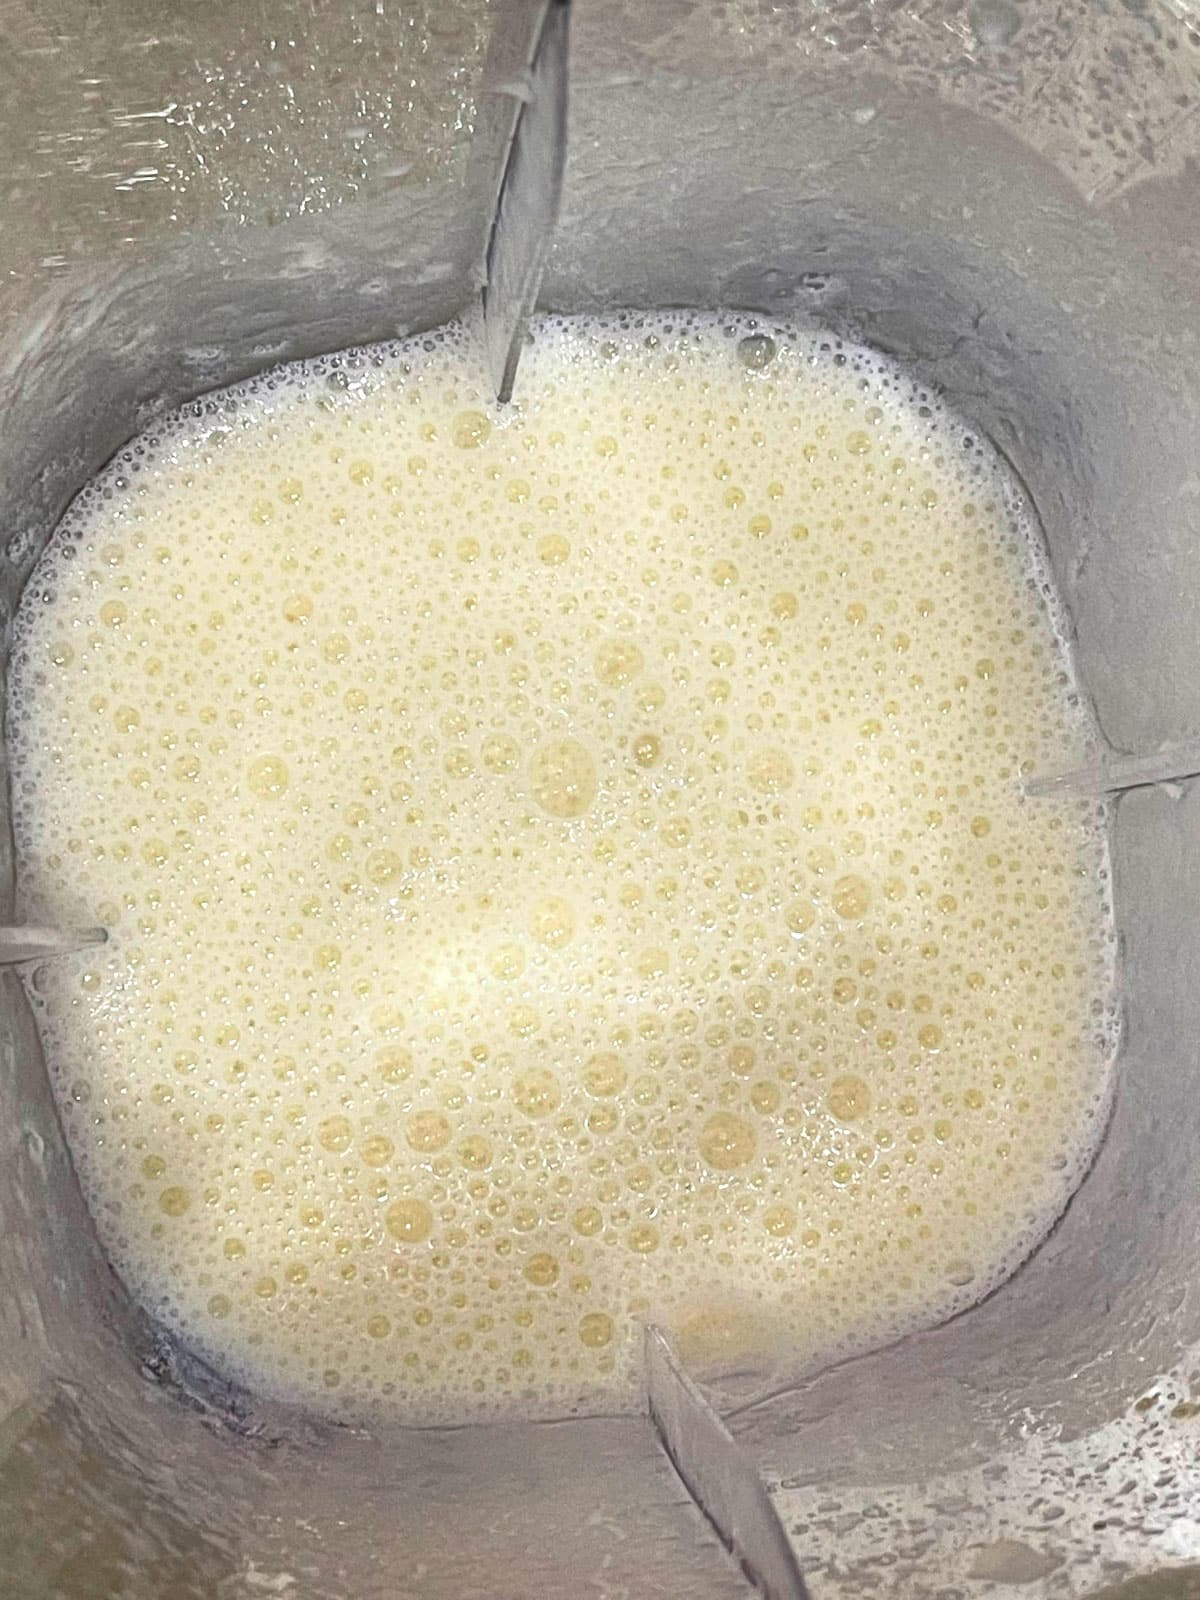 making pineapple milkshake